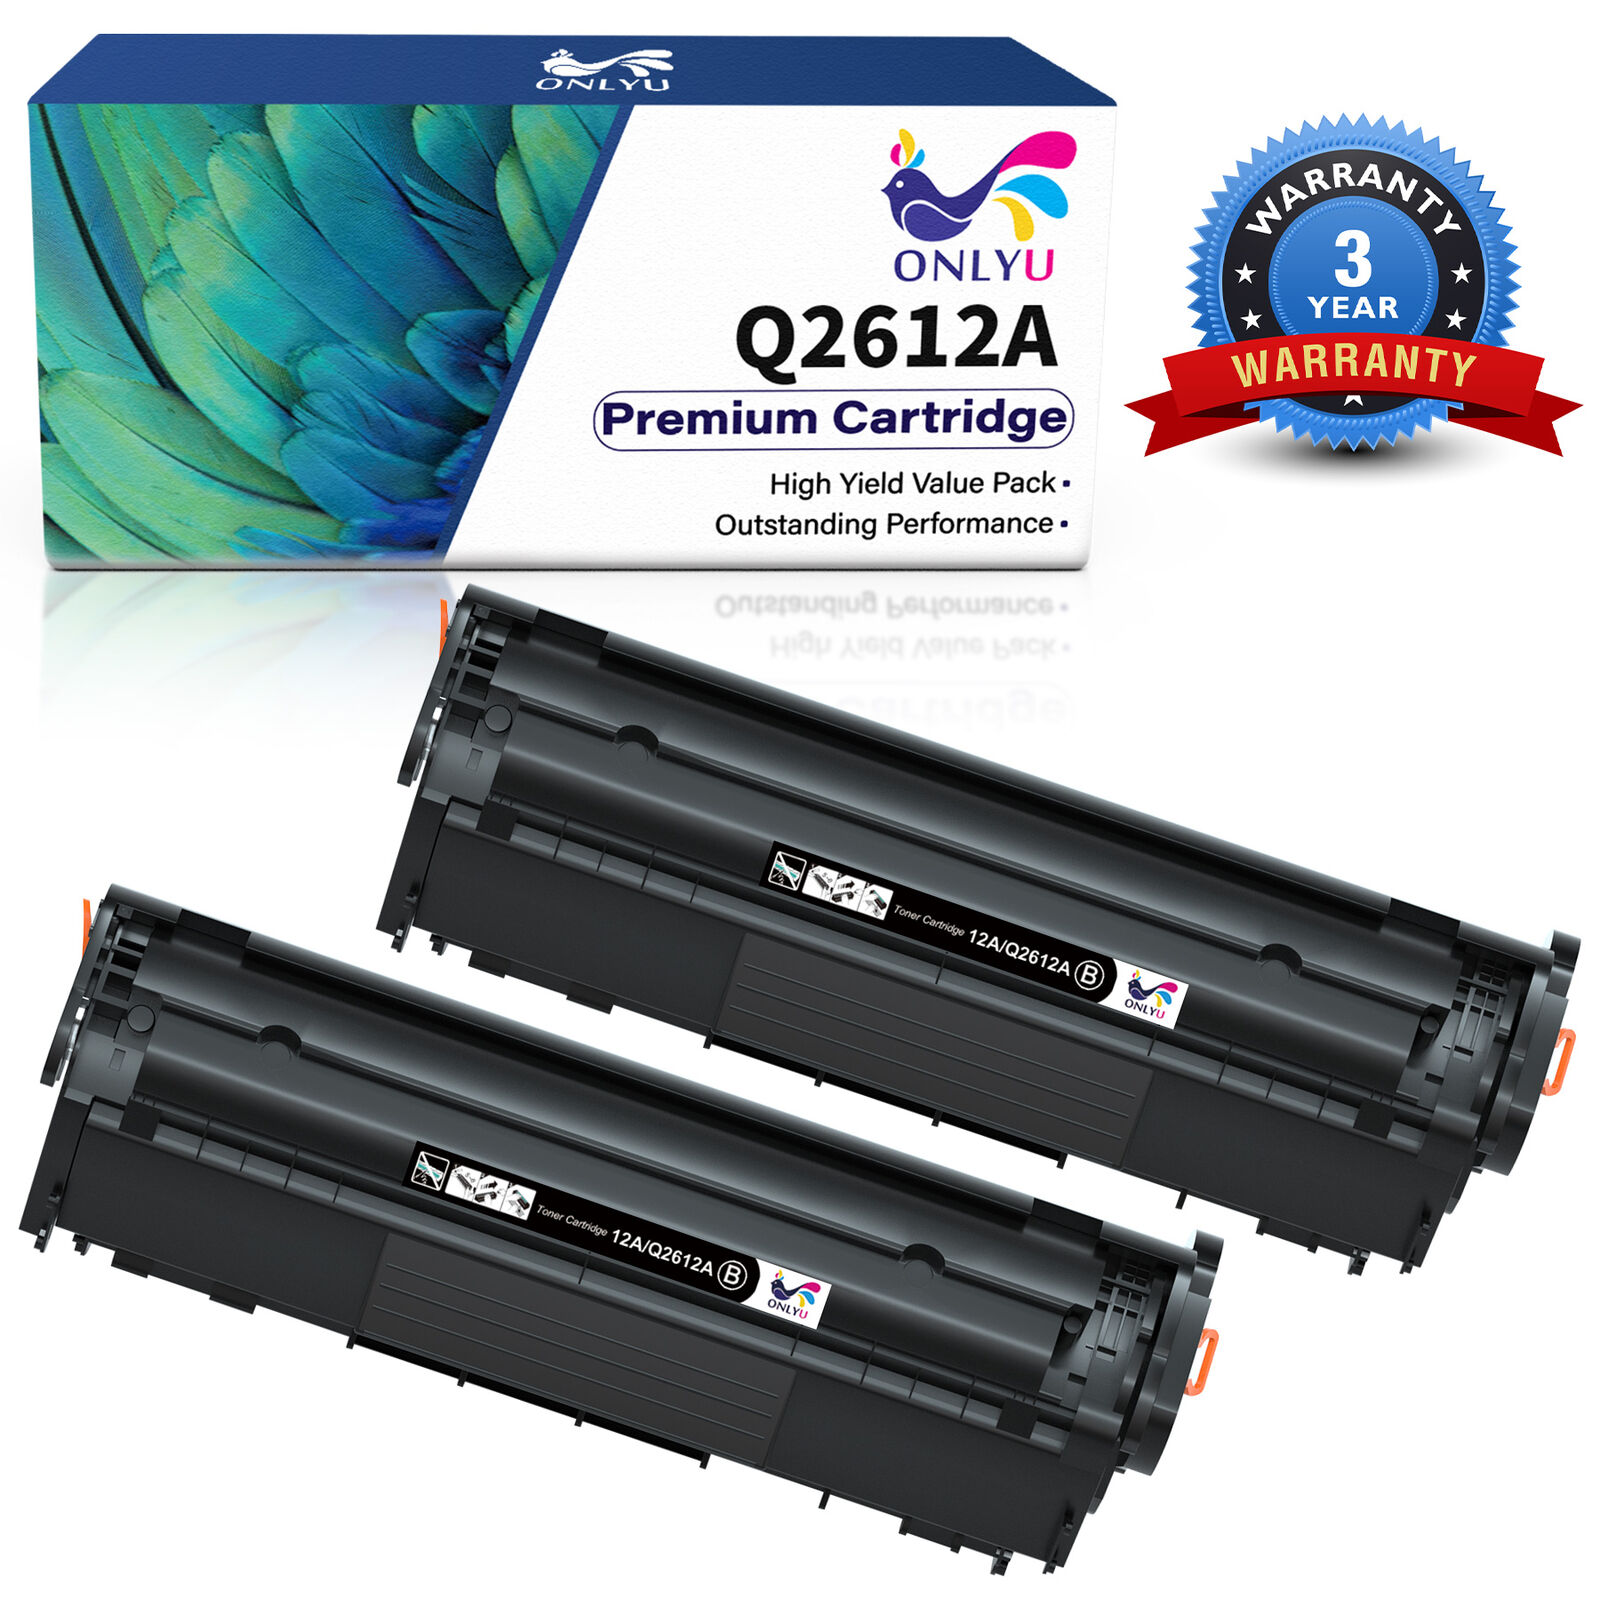 2 Pcs Q2612A 12A Toner Cartridge Replacement For HP LaserJet 1015 1020 1022 1012